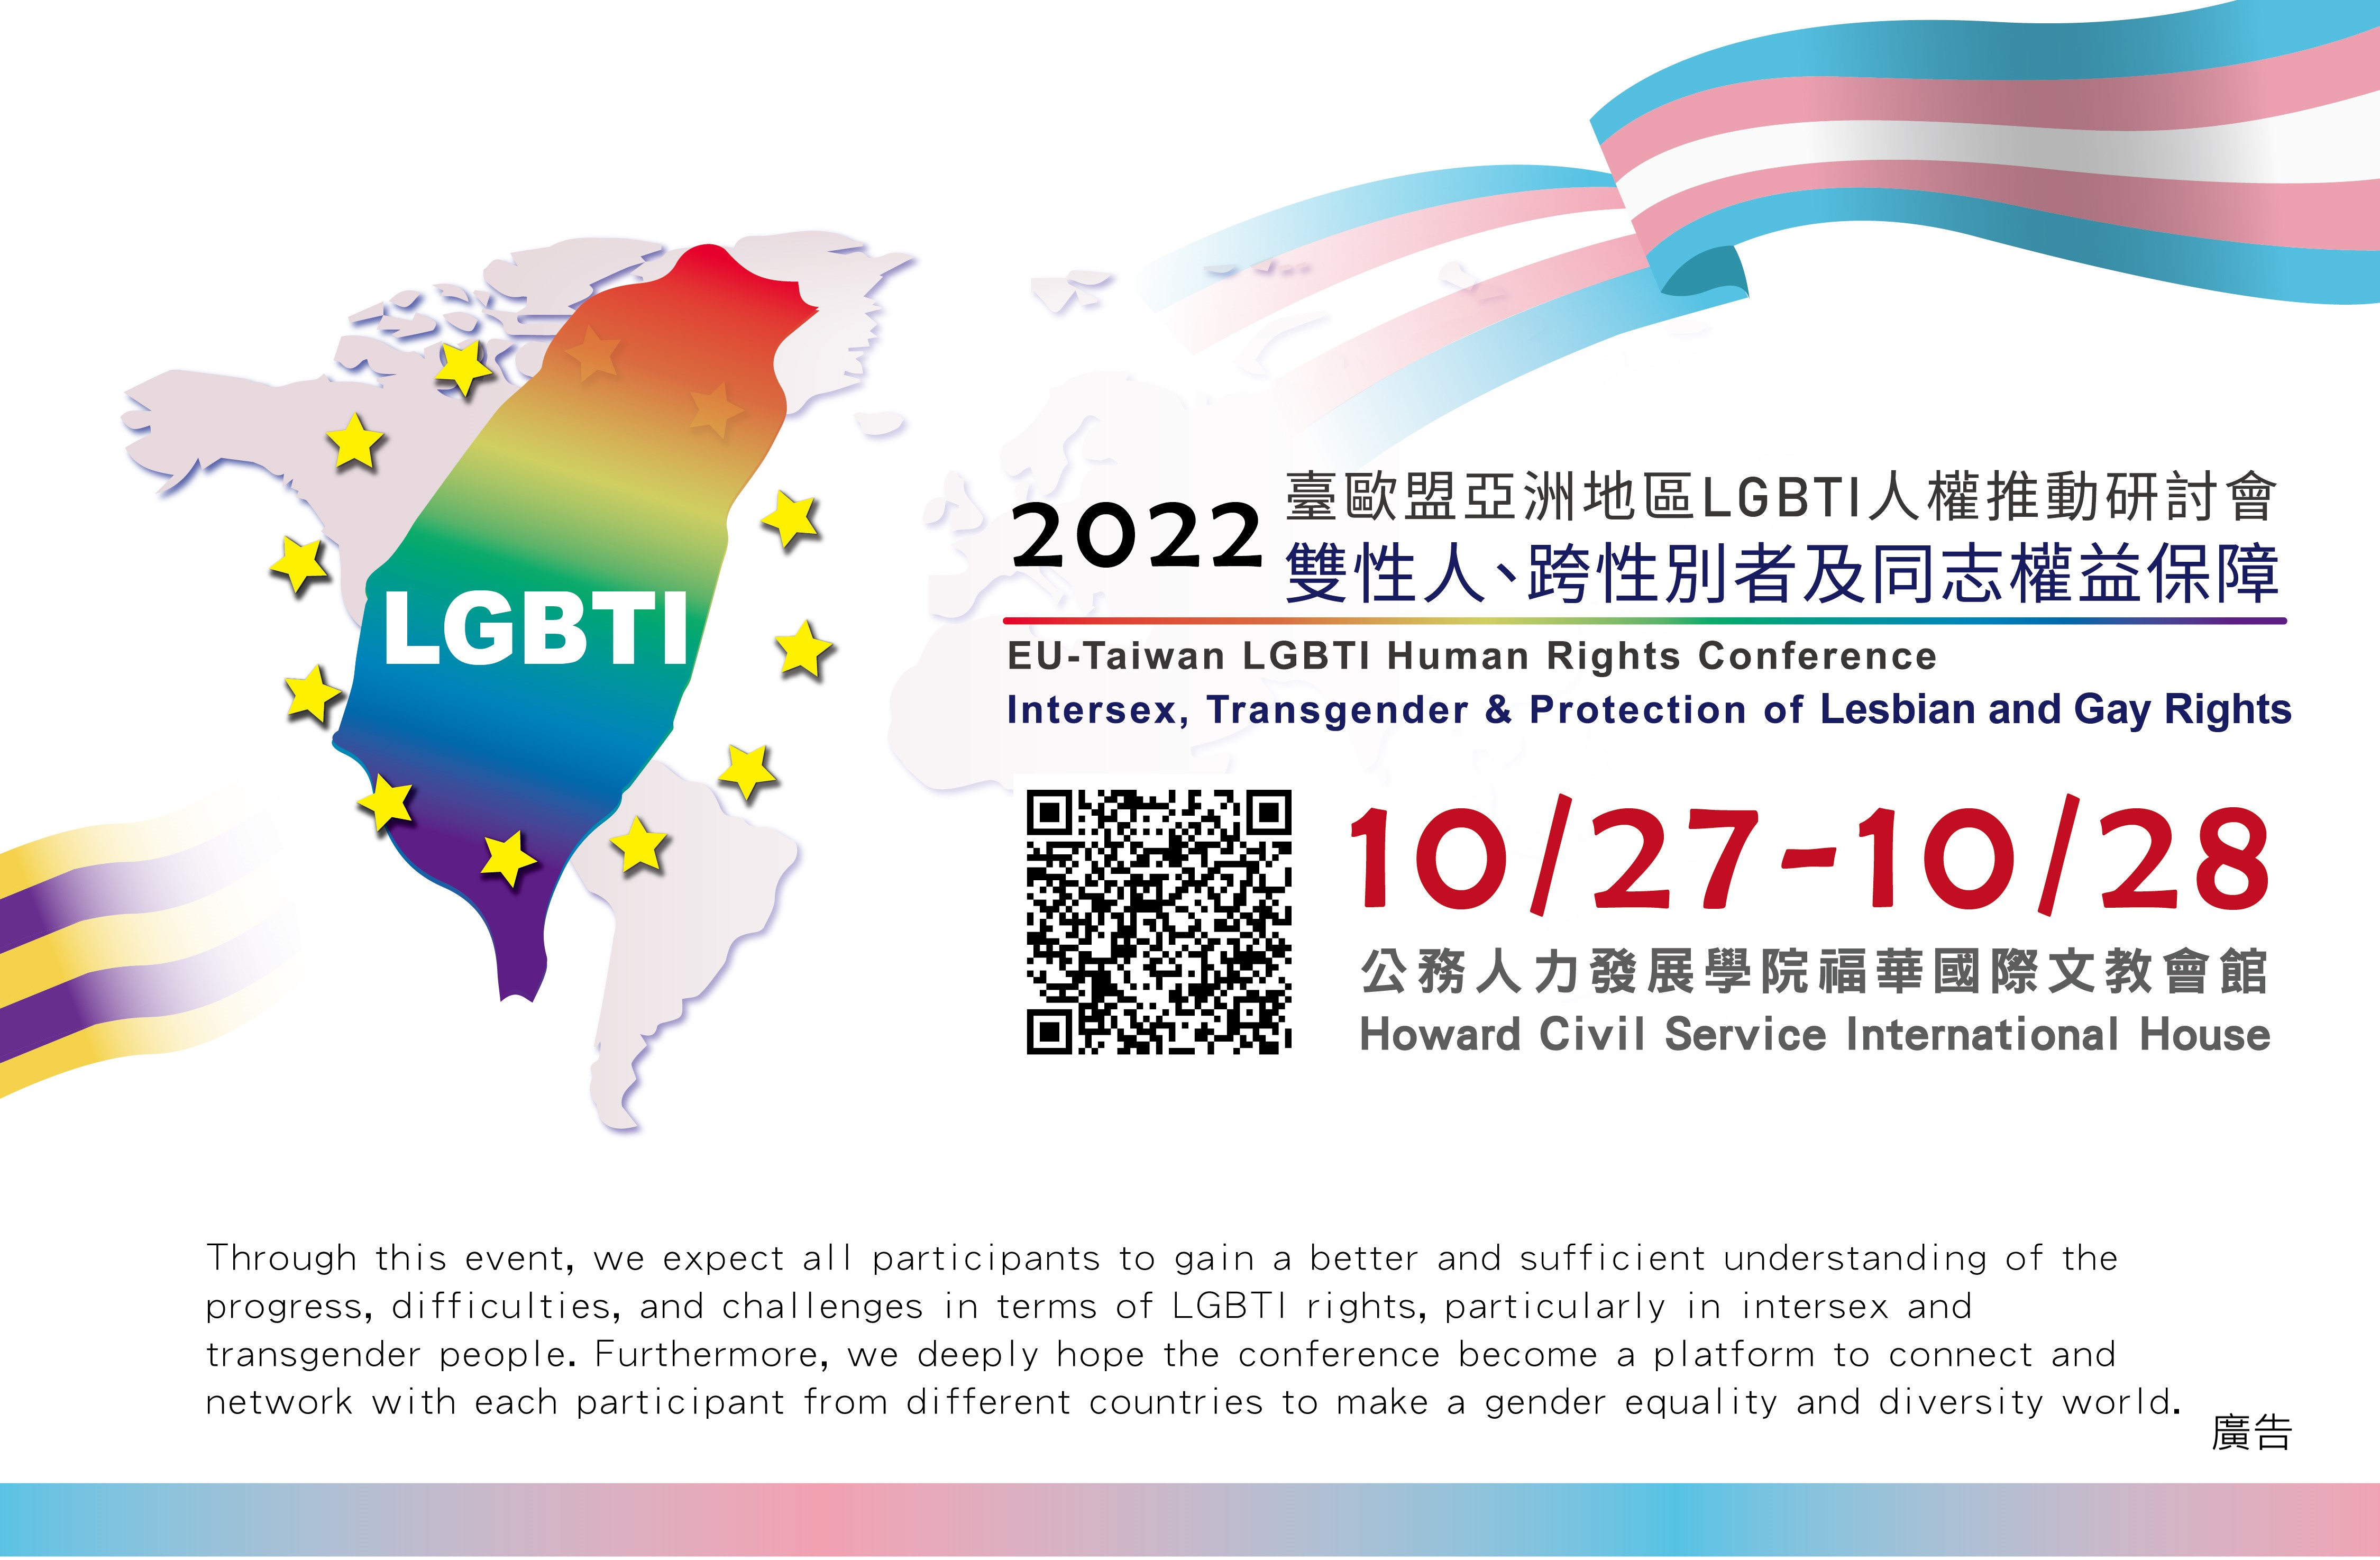 2022 EU-Taiwan LGBTI Human Rights Conference—Intersex, Transgender & Protection of Lesbian and Gay Rights